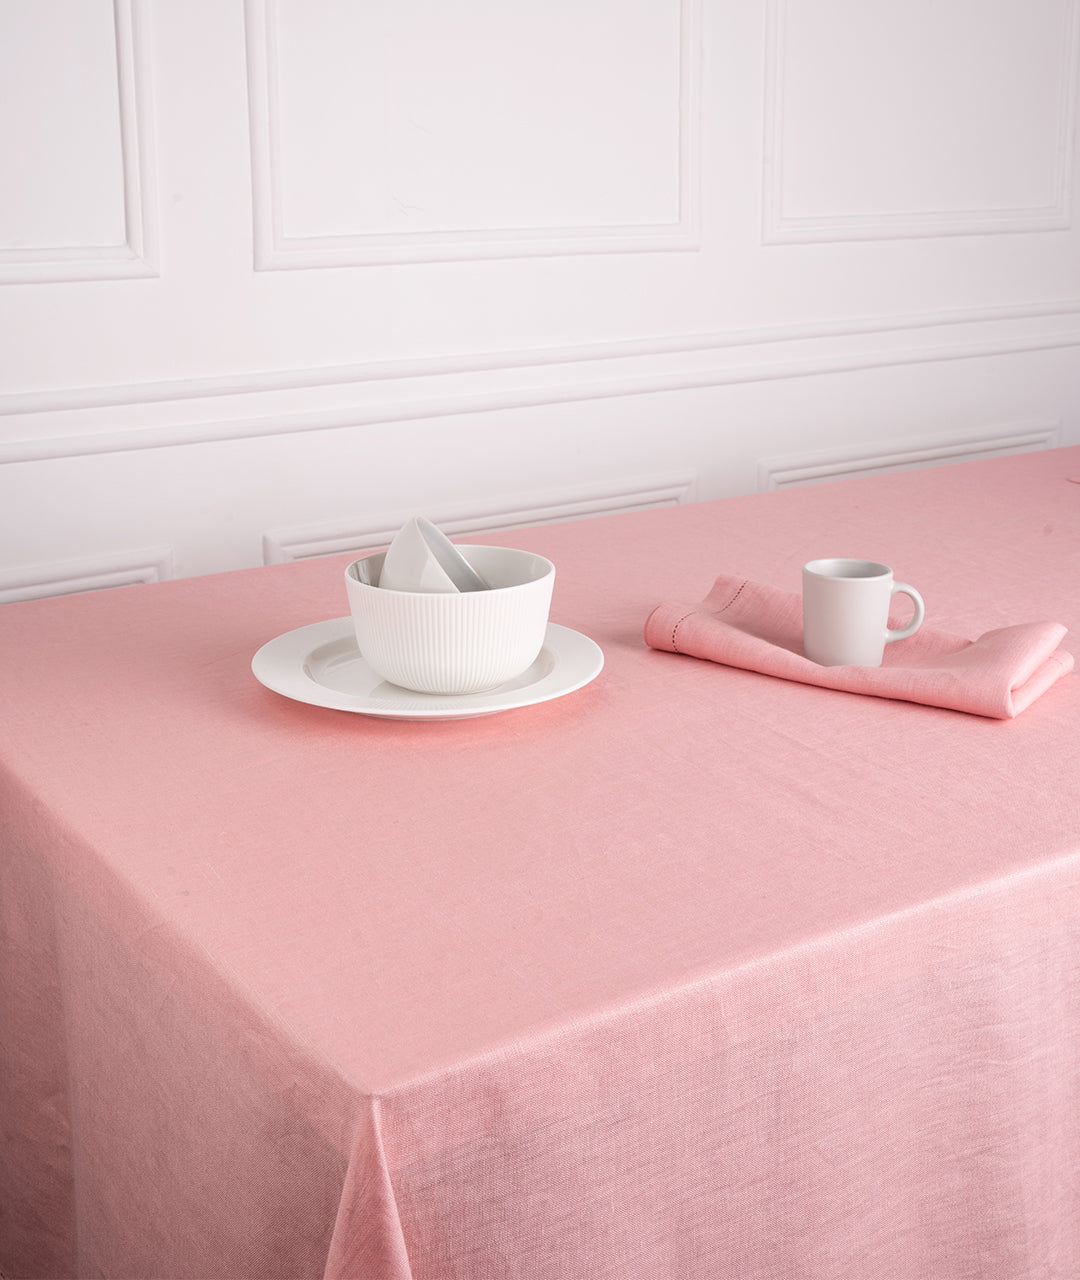 Dusty Pink Linen Tablecloth - Hemstitch